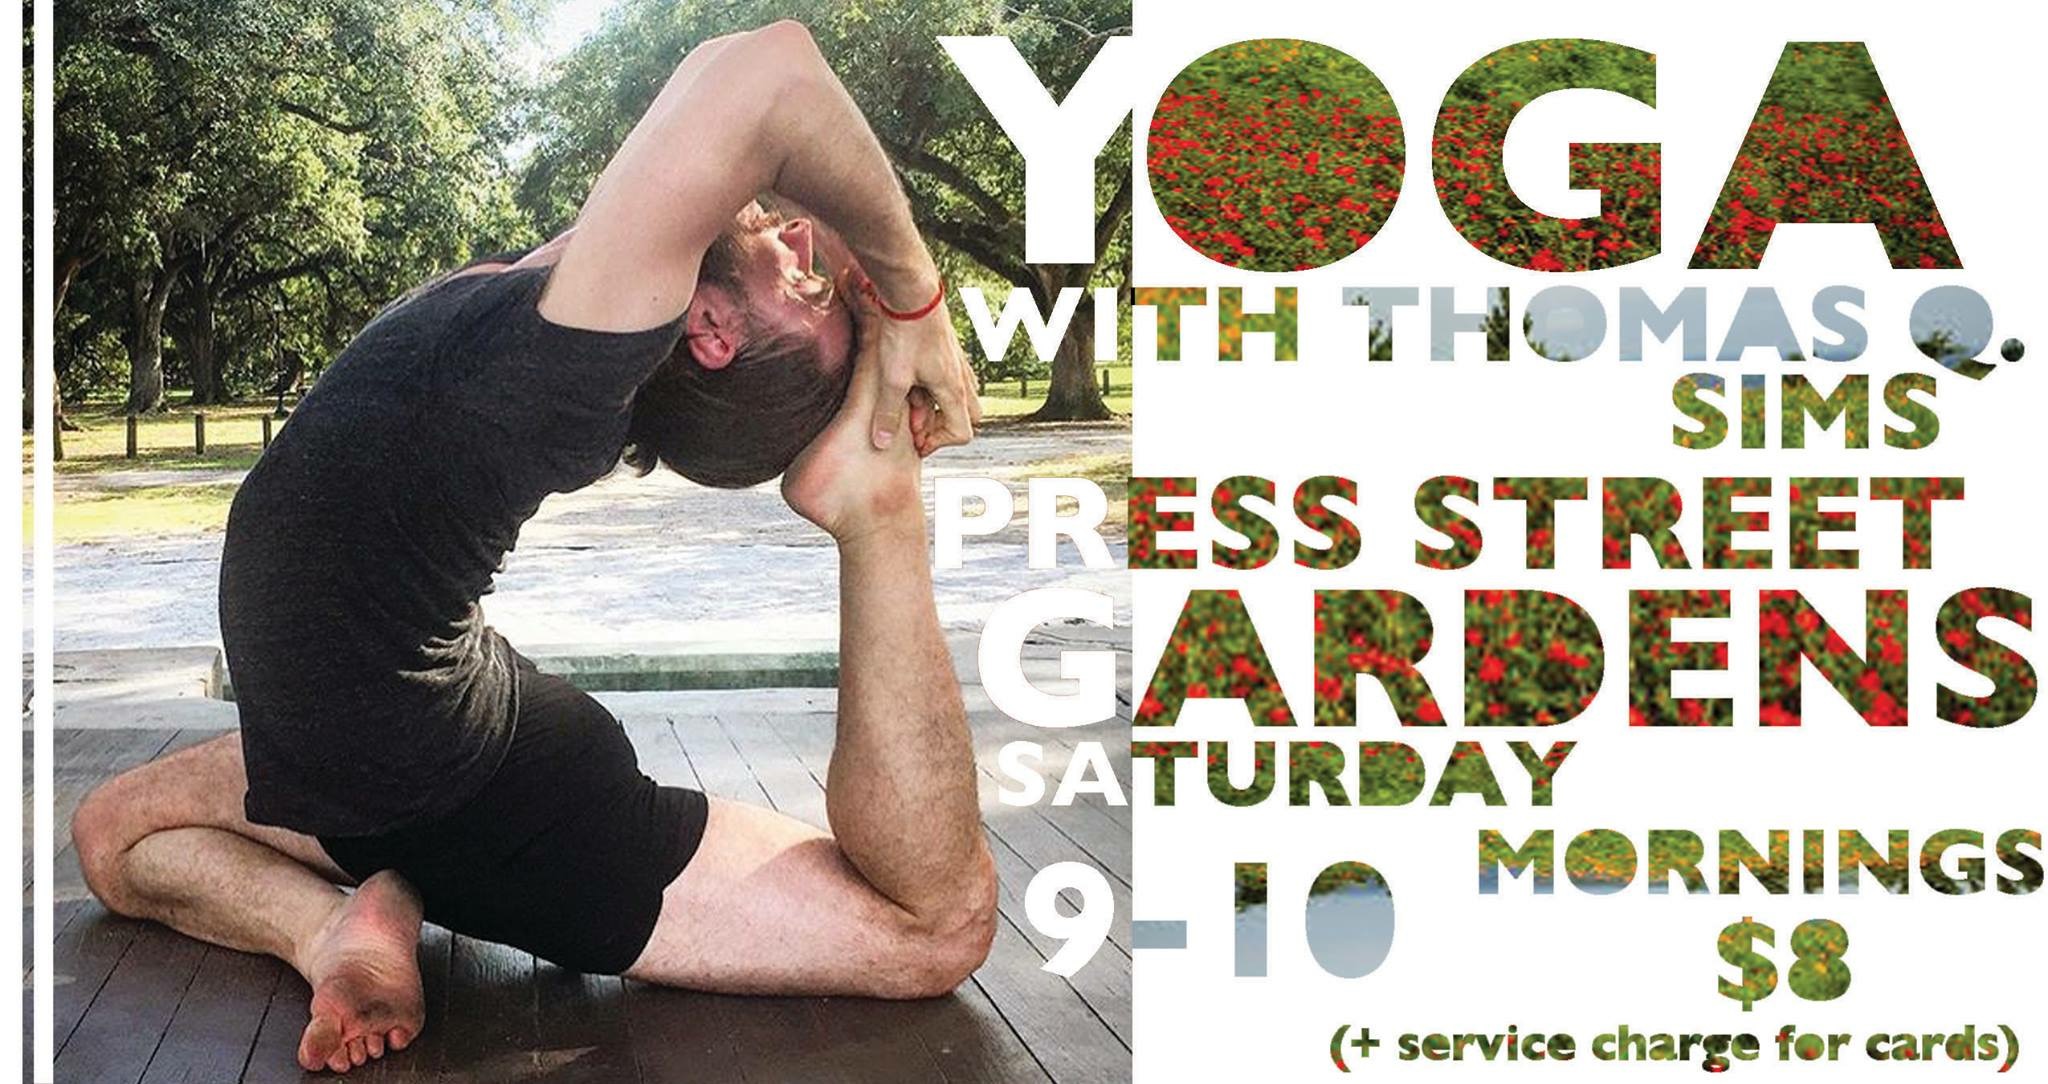 Saturday Mornings In Press Street Gardens: Yoga With Thomas Q. Sims